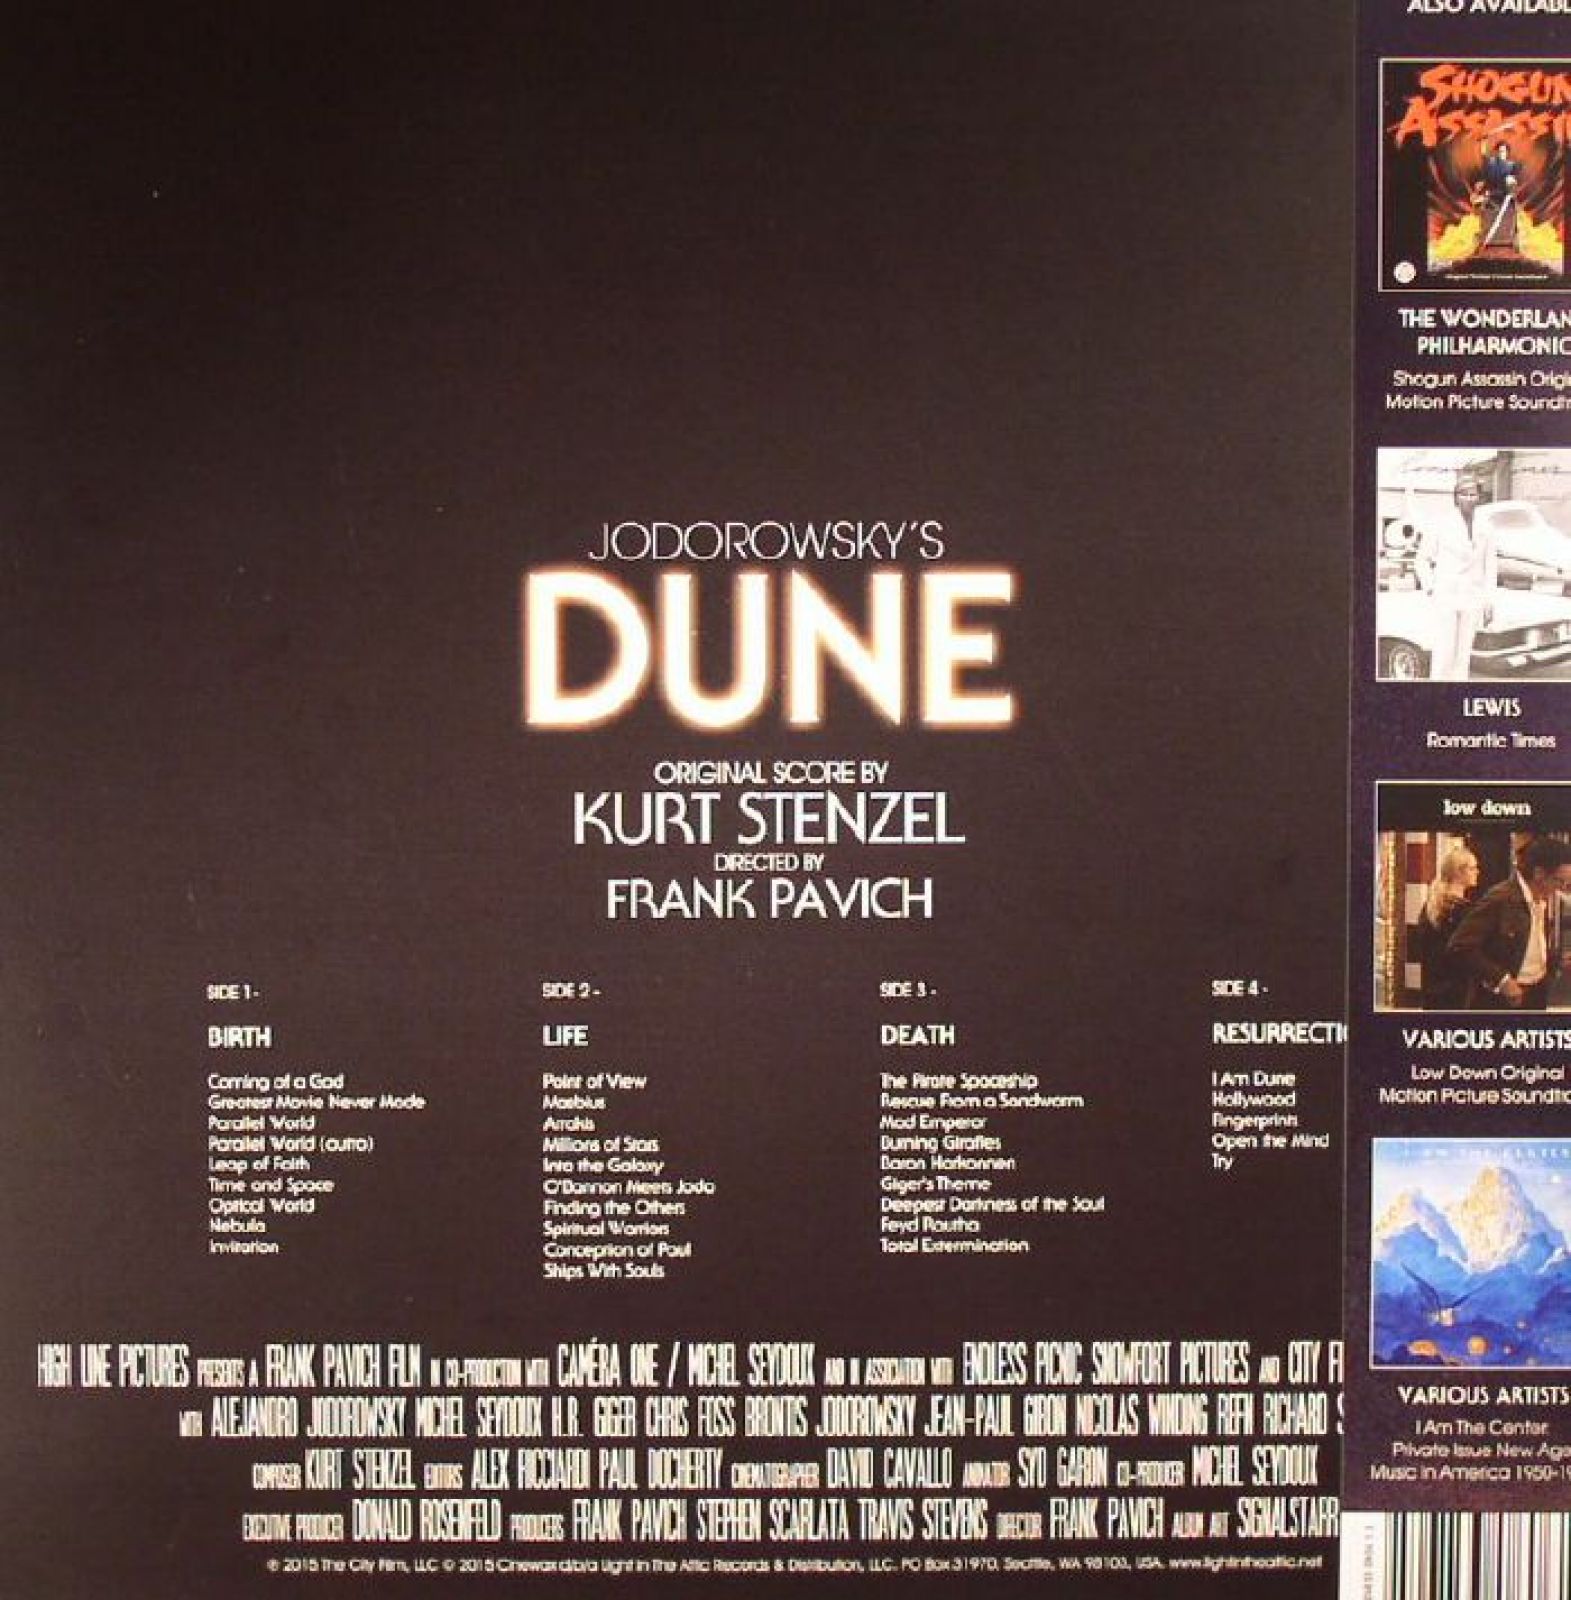 Пластинка Дюна. Dune Soundtrack. Пластинка Dune с группой Дюна. Дюна винил. Саундтрек dune